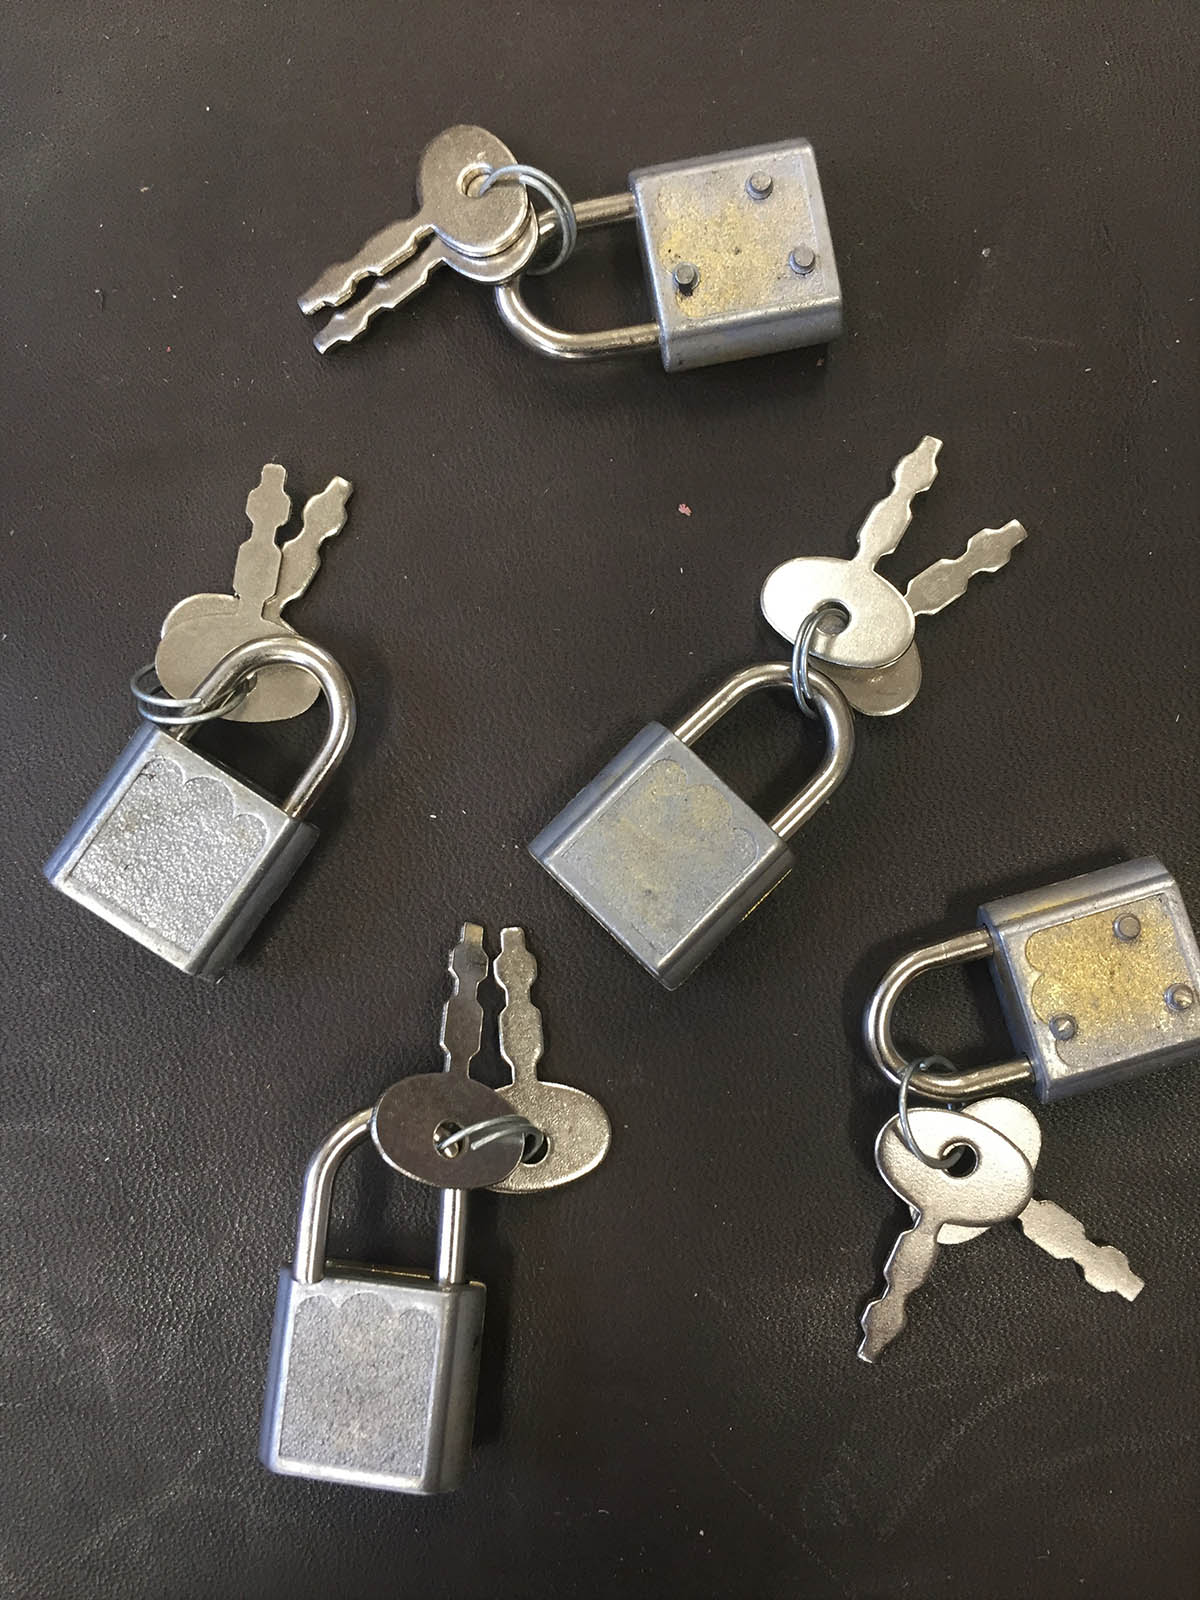 Reproduction Small Steamer Trunk Locks with Keys, Brettuns Village